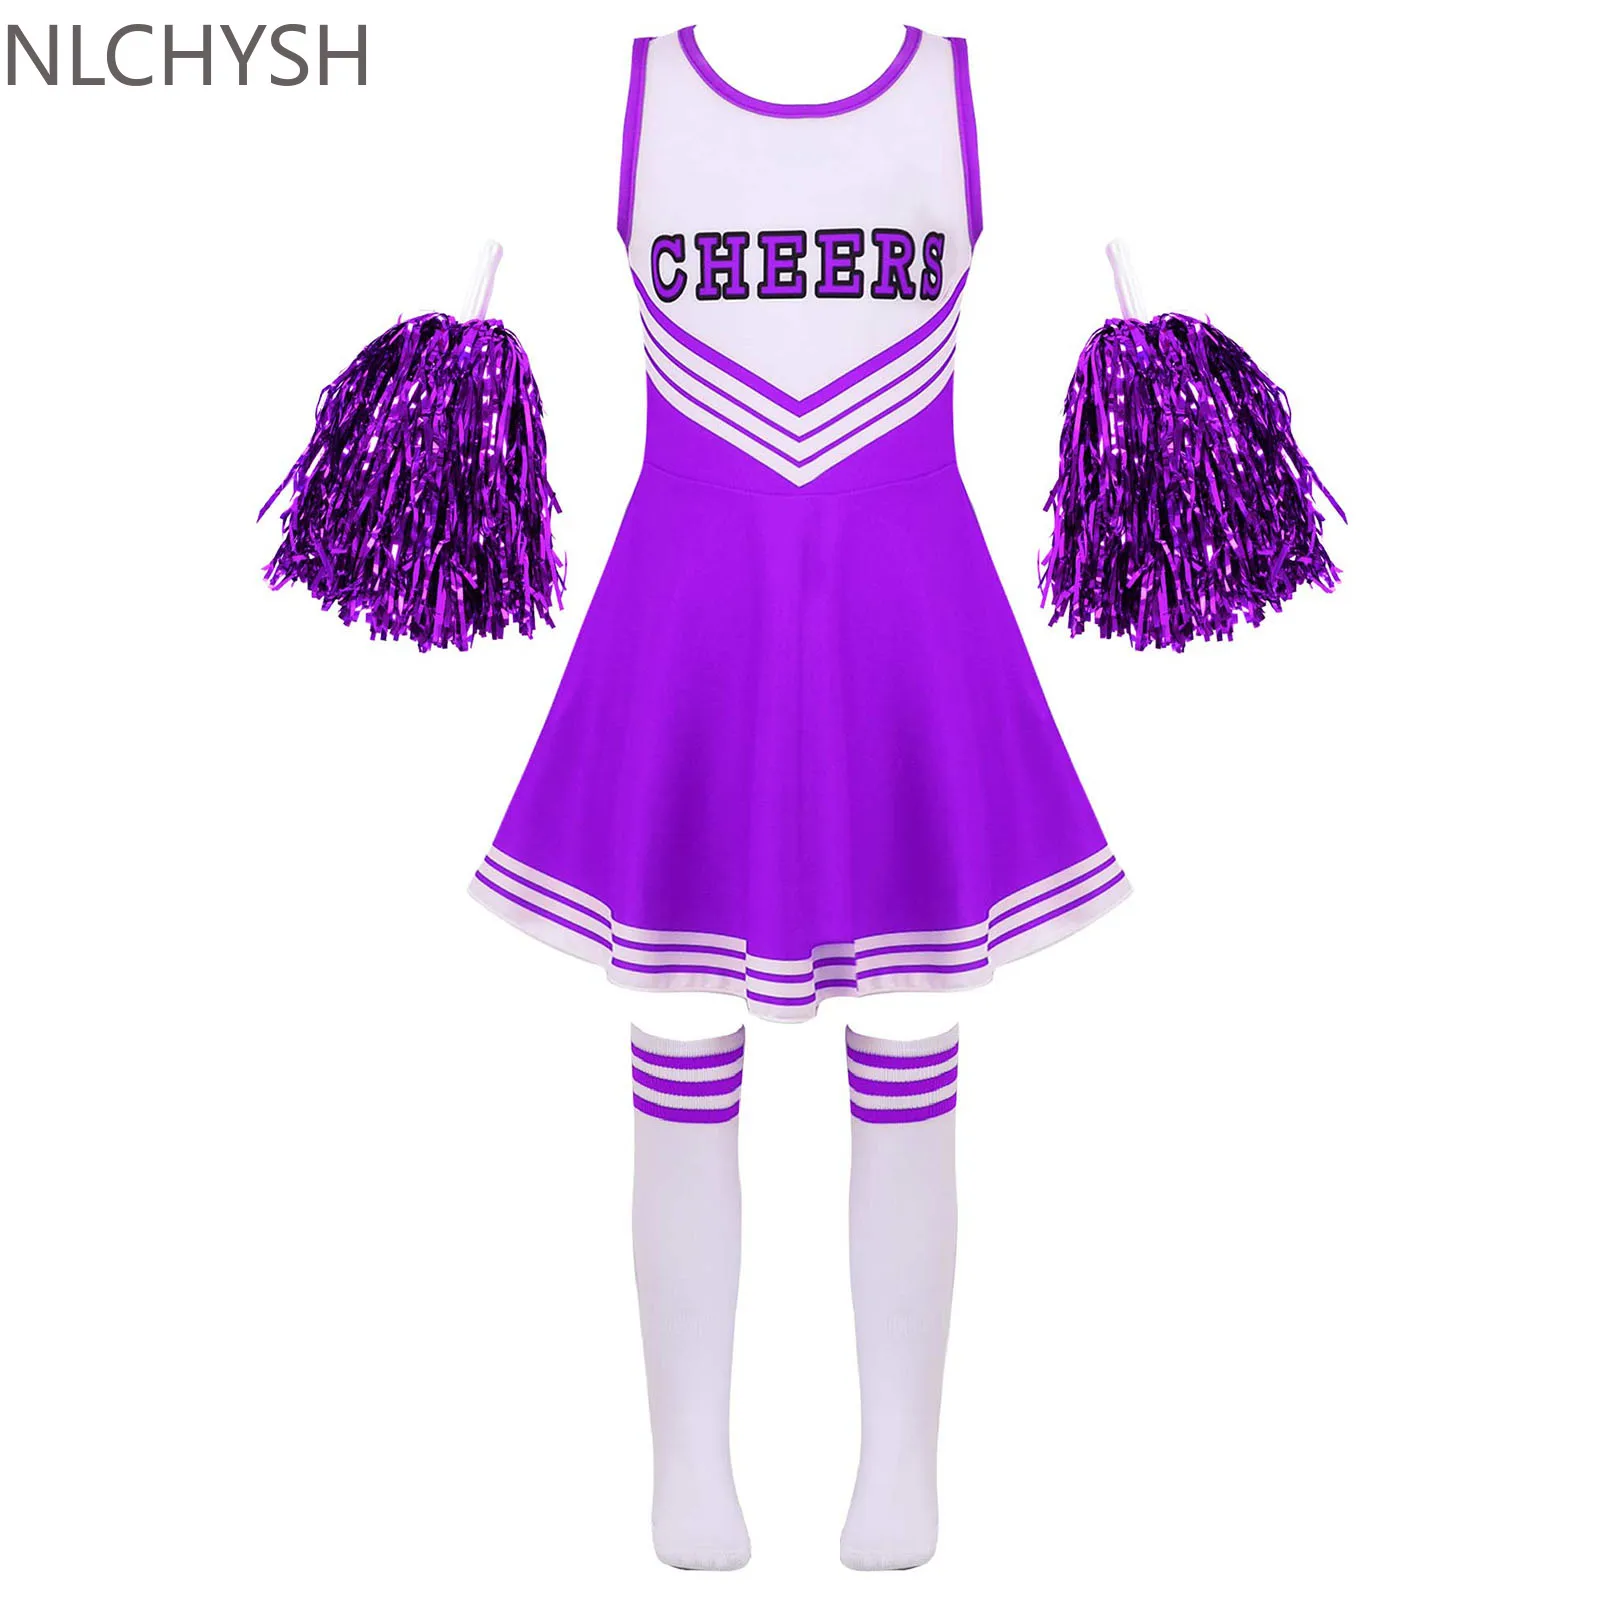 Girls Cheerleading Uniform Dance Costume Kids Cheerleader Outfit Round Neckline Patchwork Style Dance Dress Flower and Socks